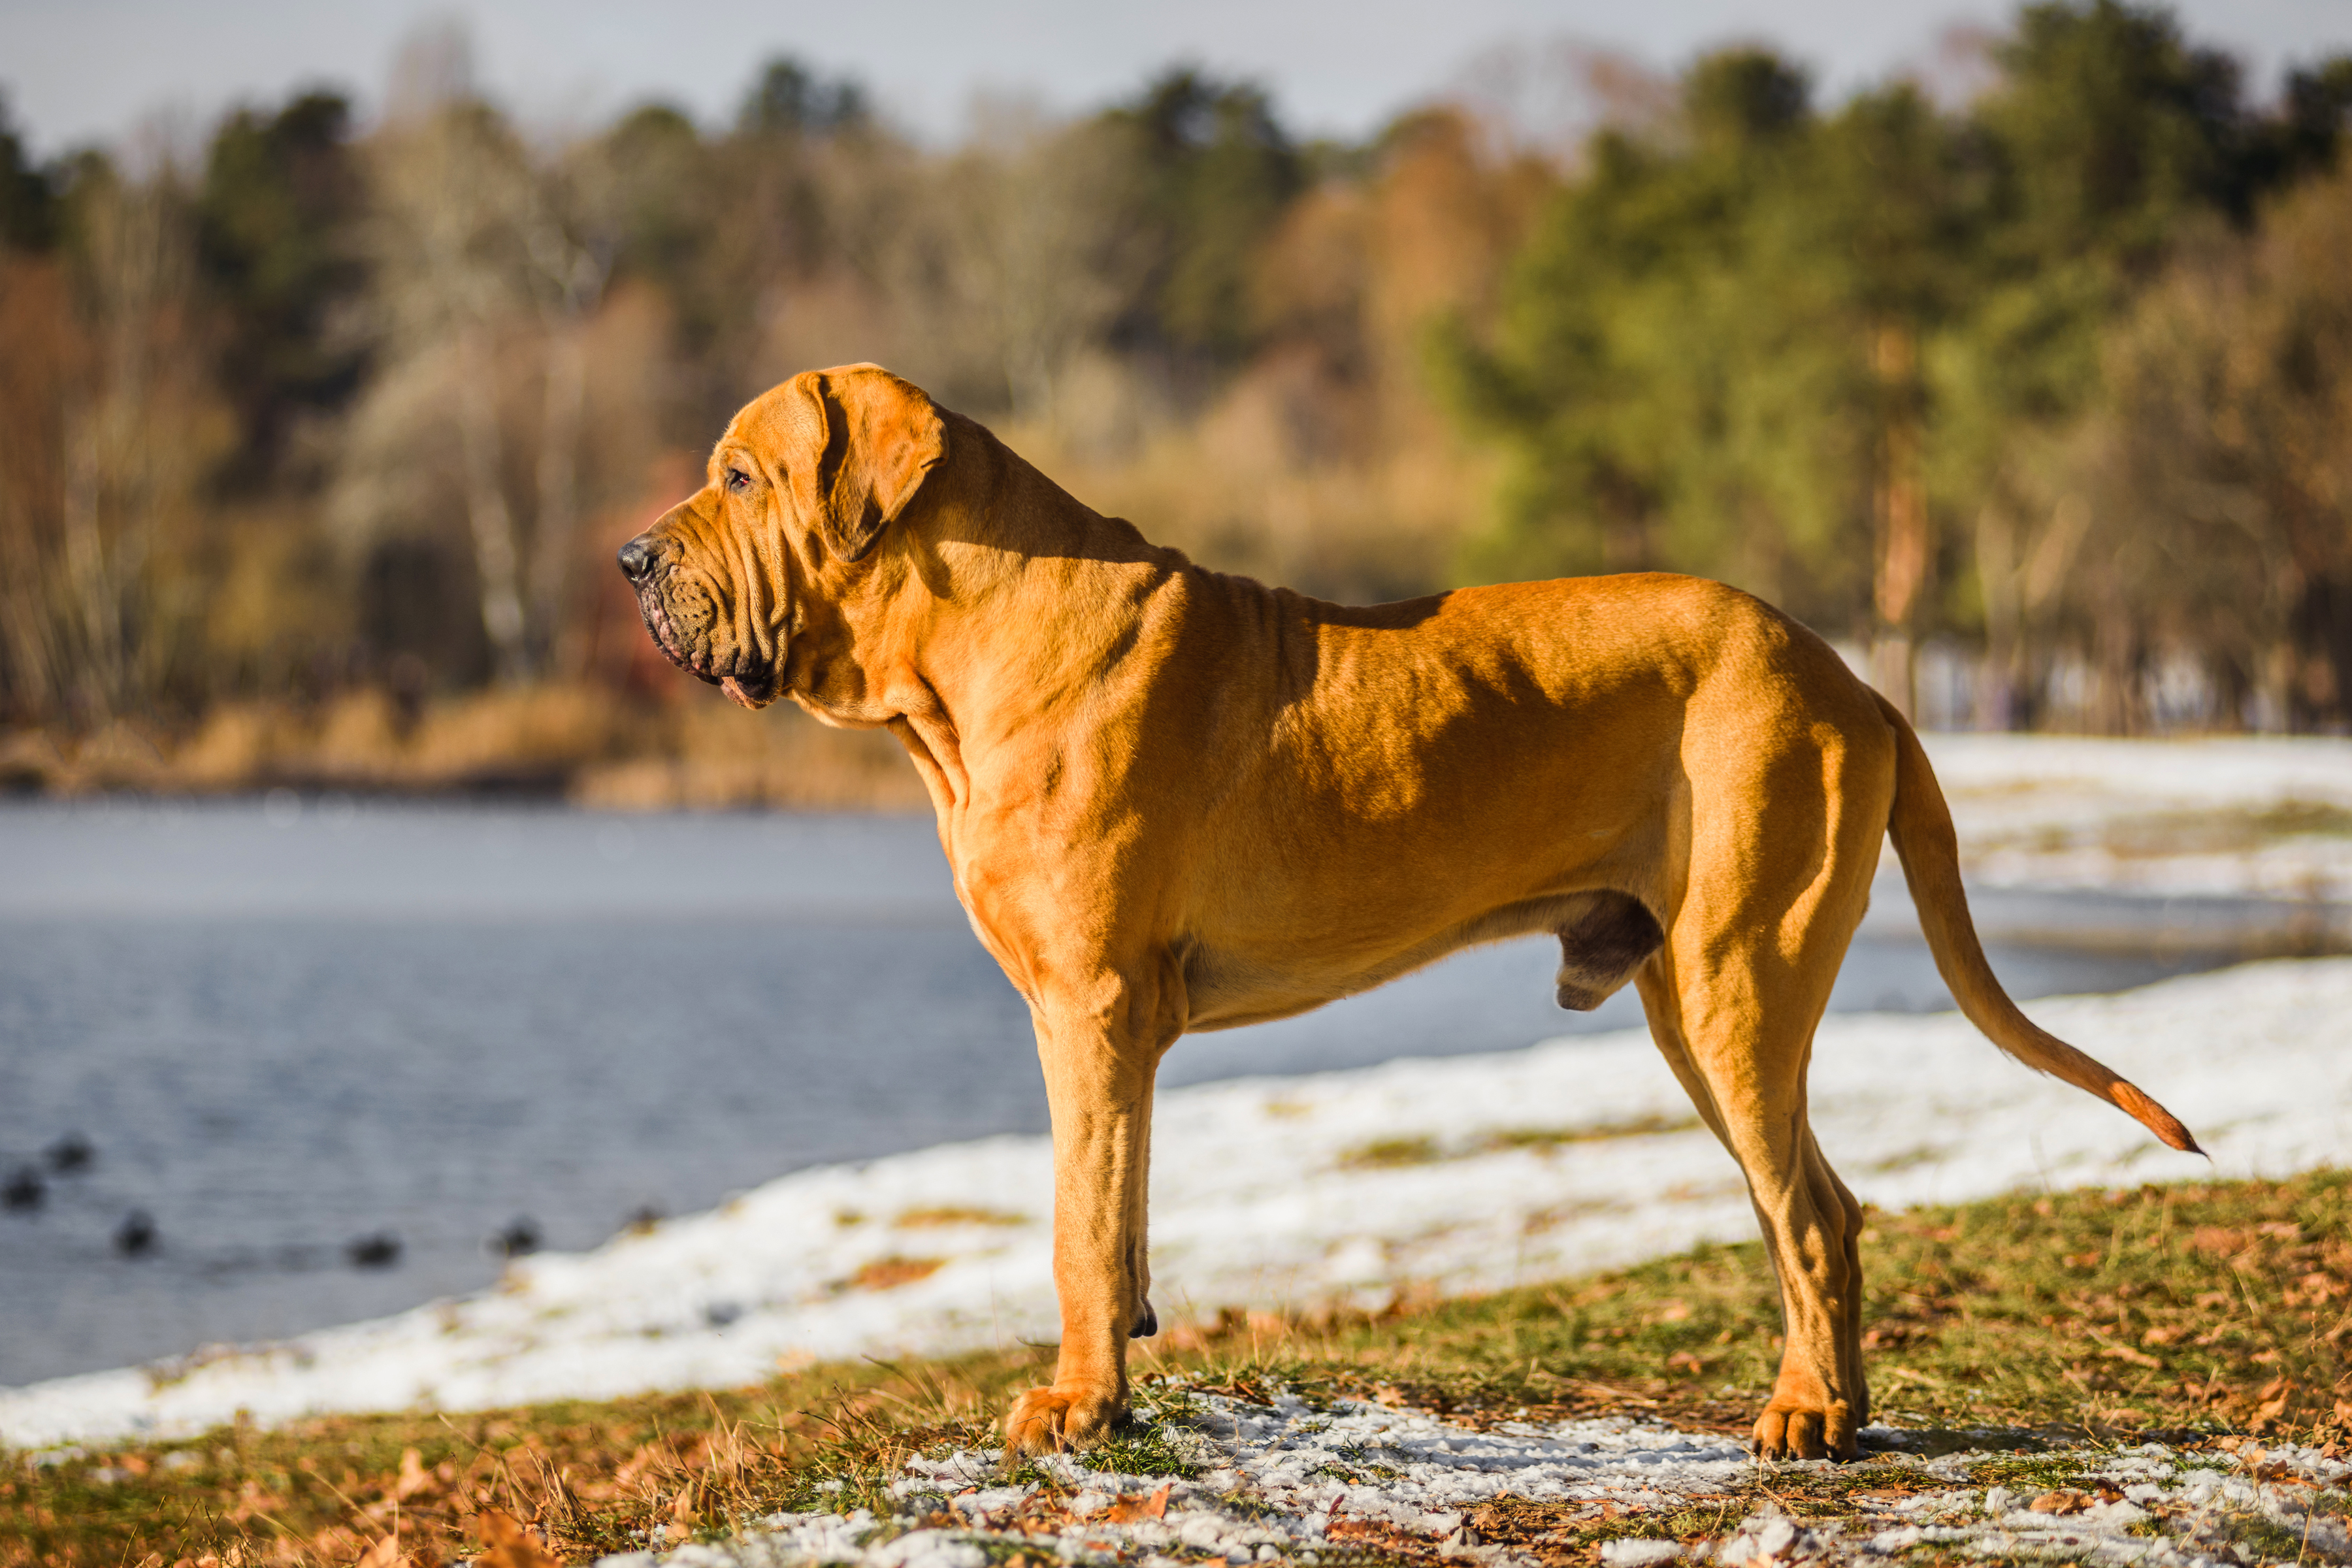 Dog Fila Brasileiro: traits, characteristics and origin